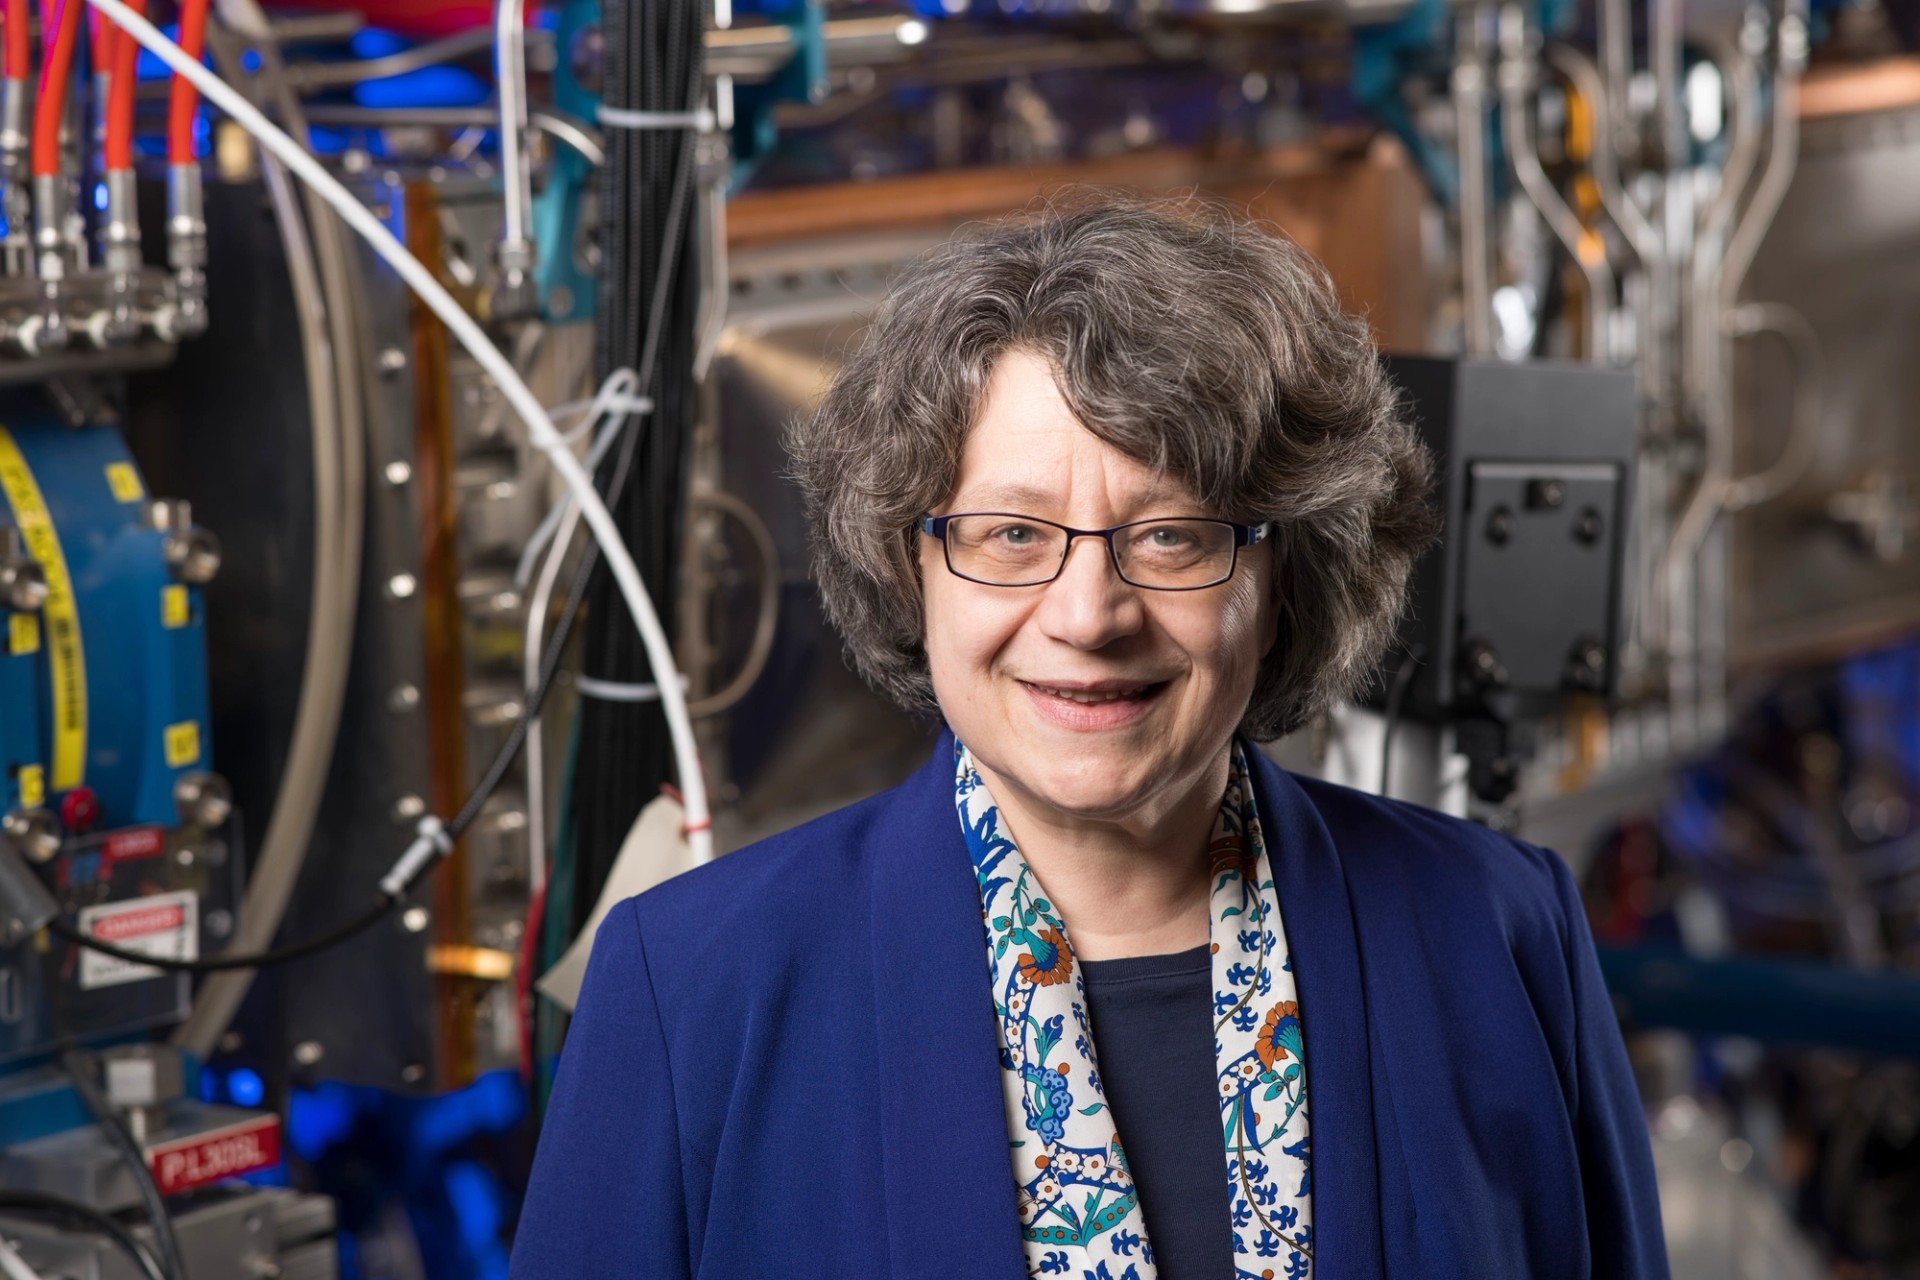 Lia Merminga is the director of Fermilab